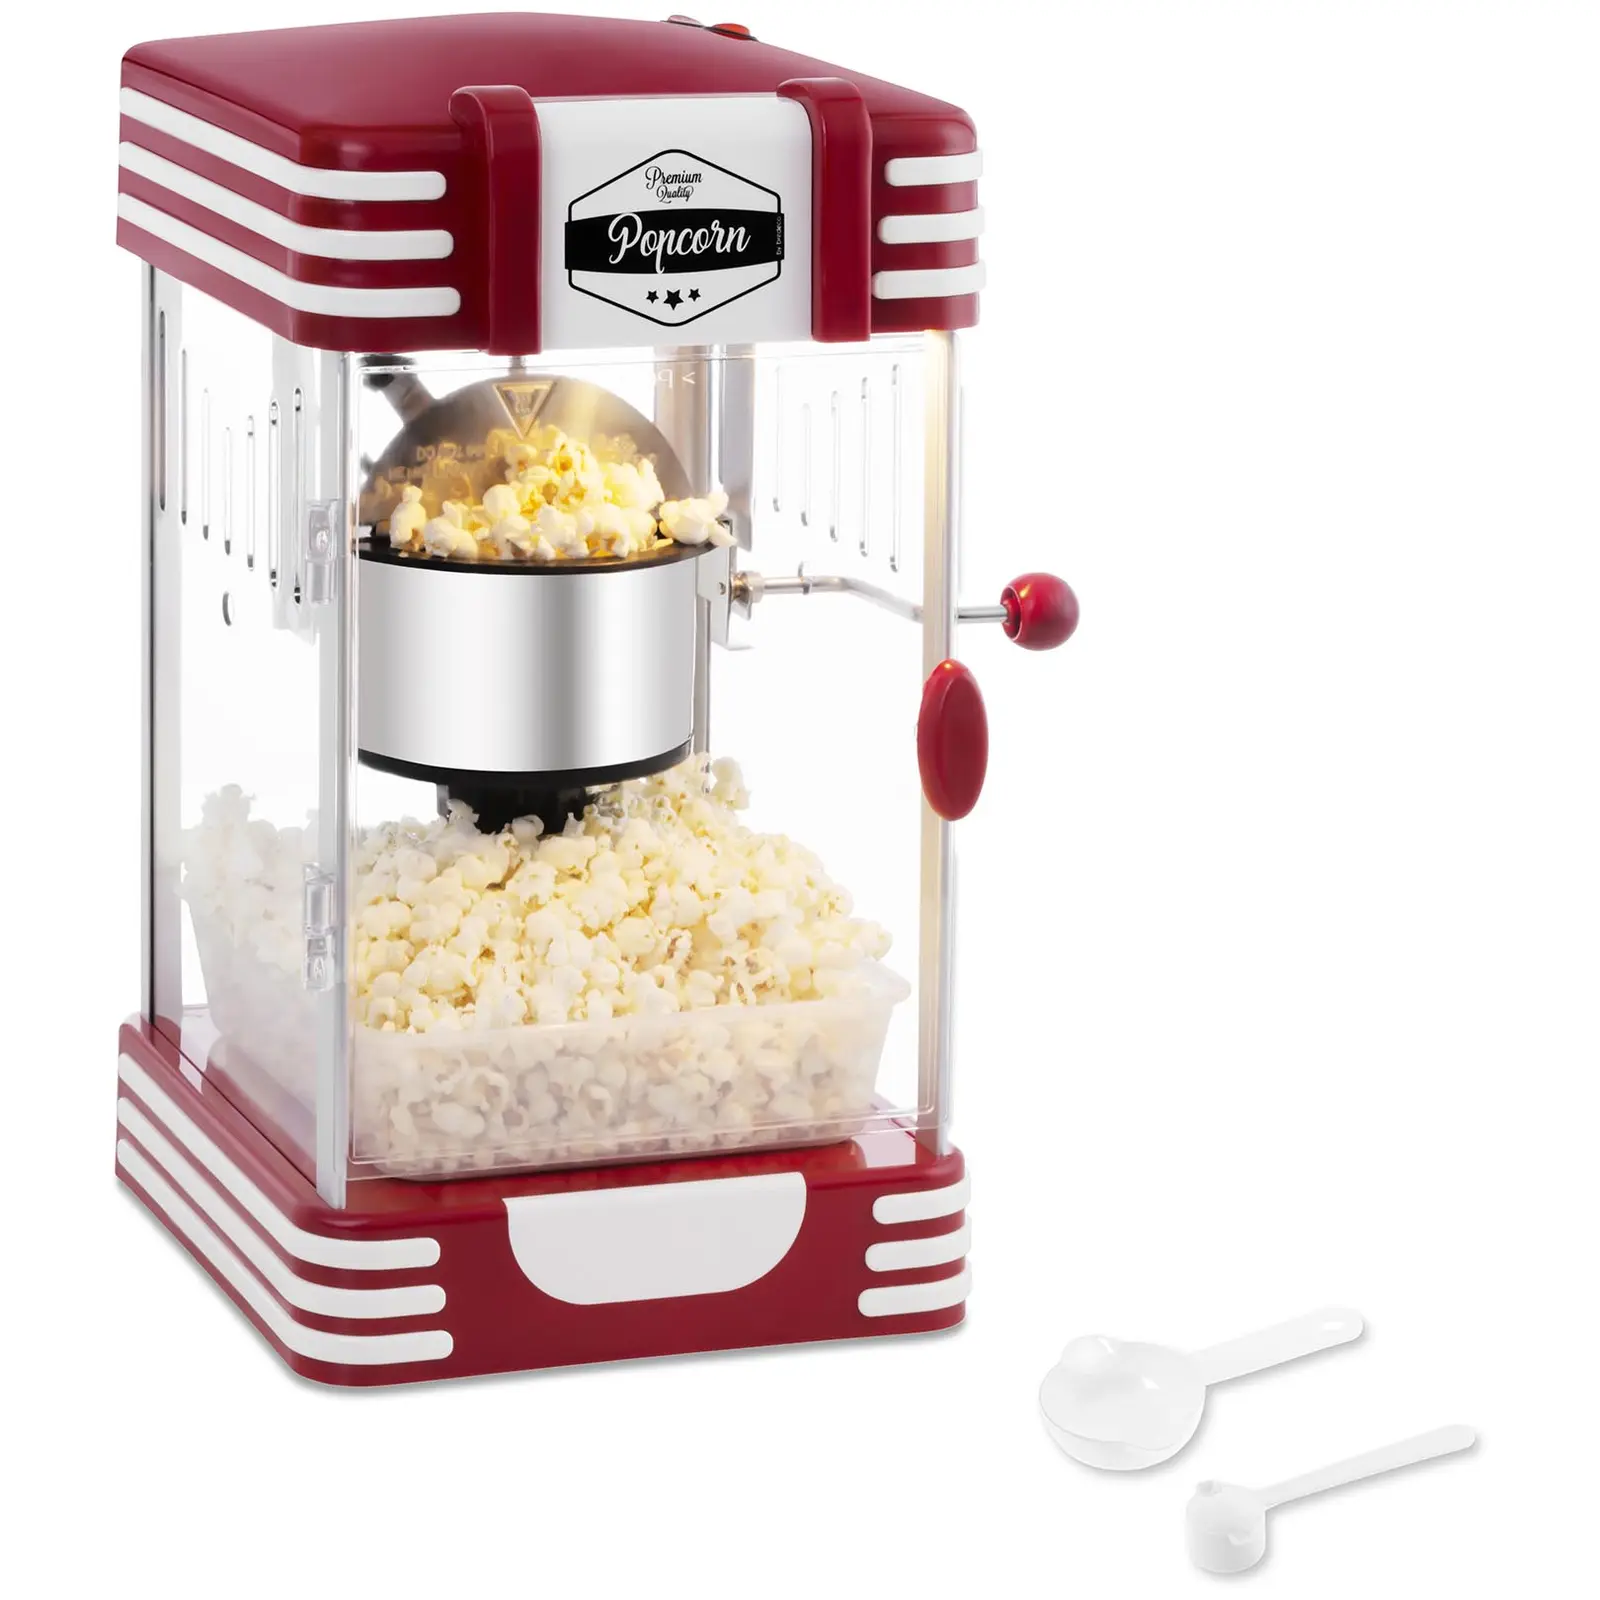 Stroj na popcorn - 50. roky retro design - červený